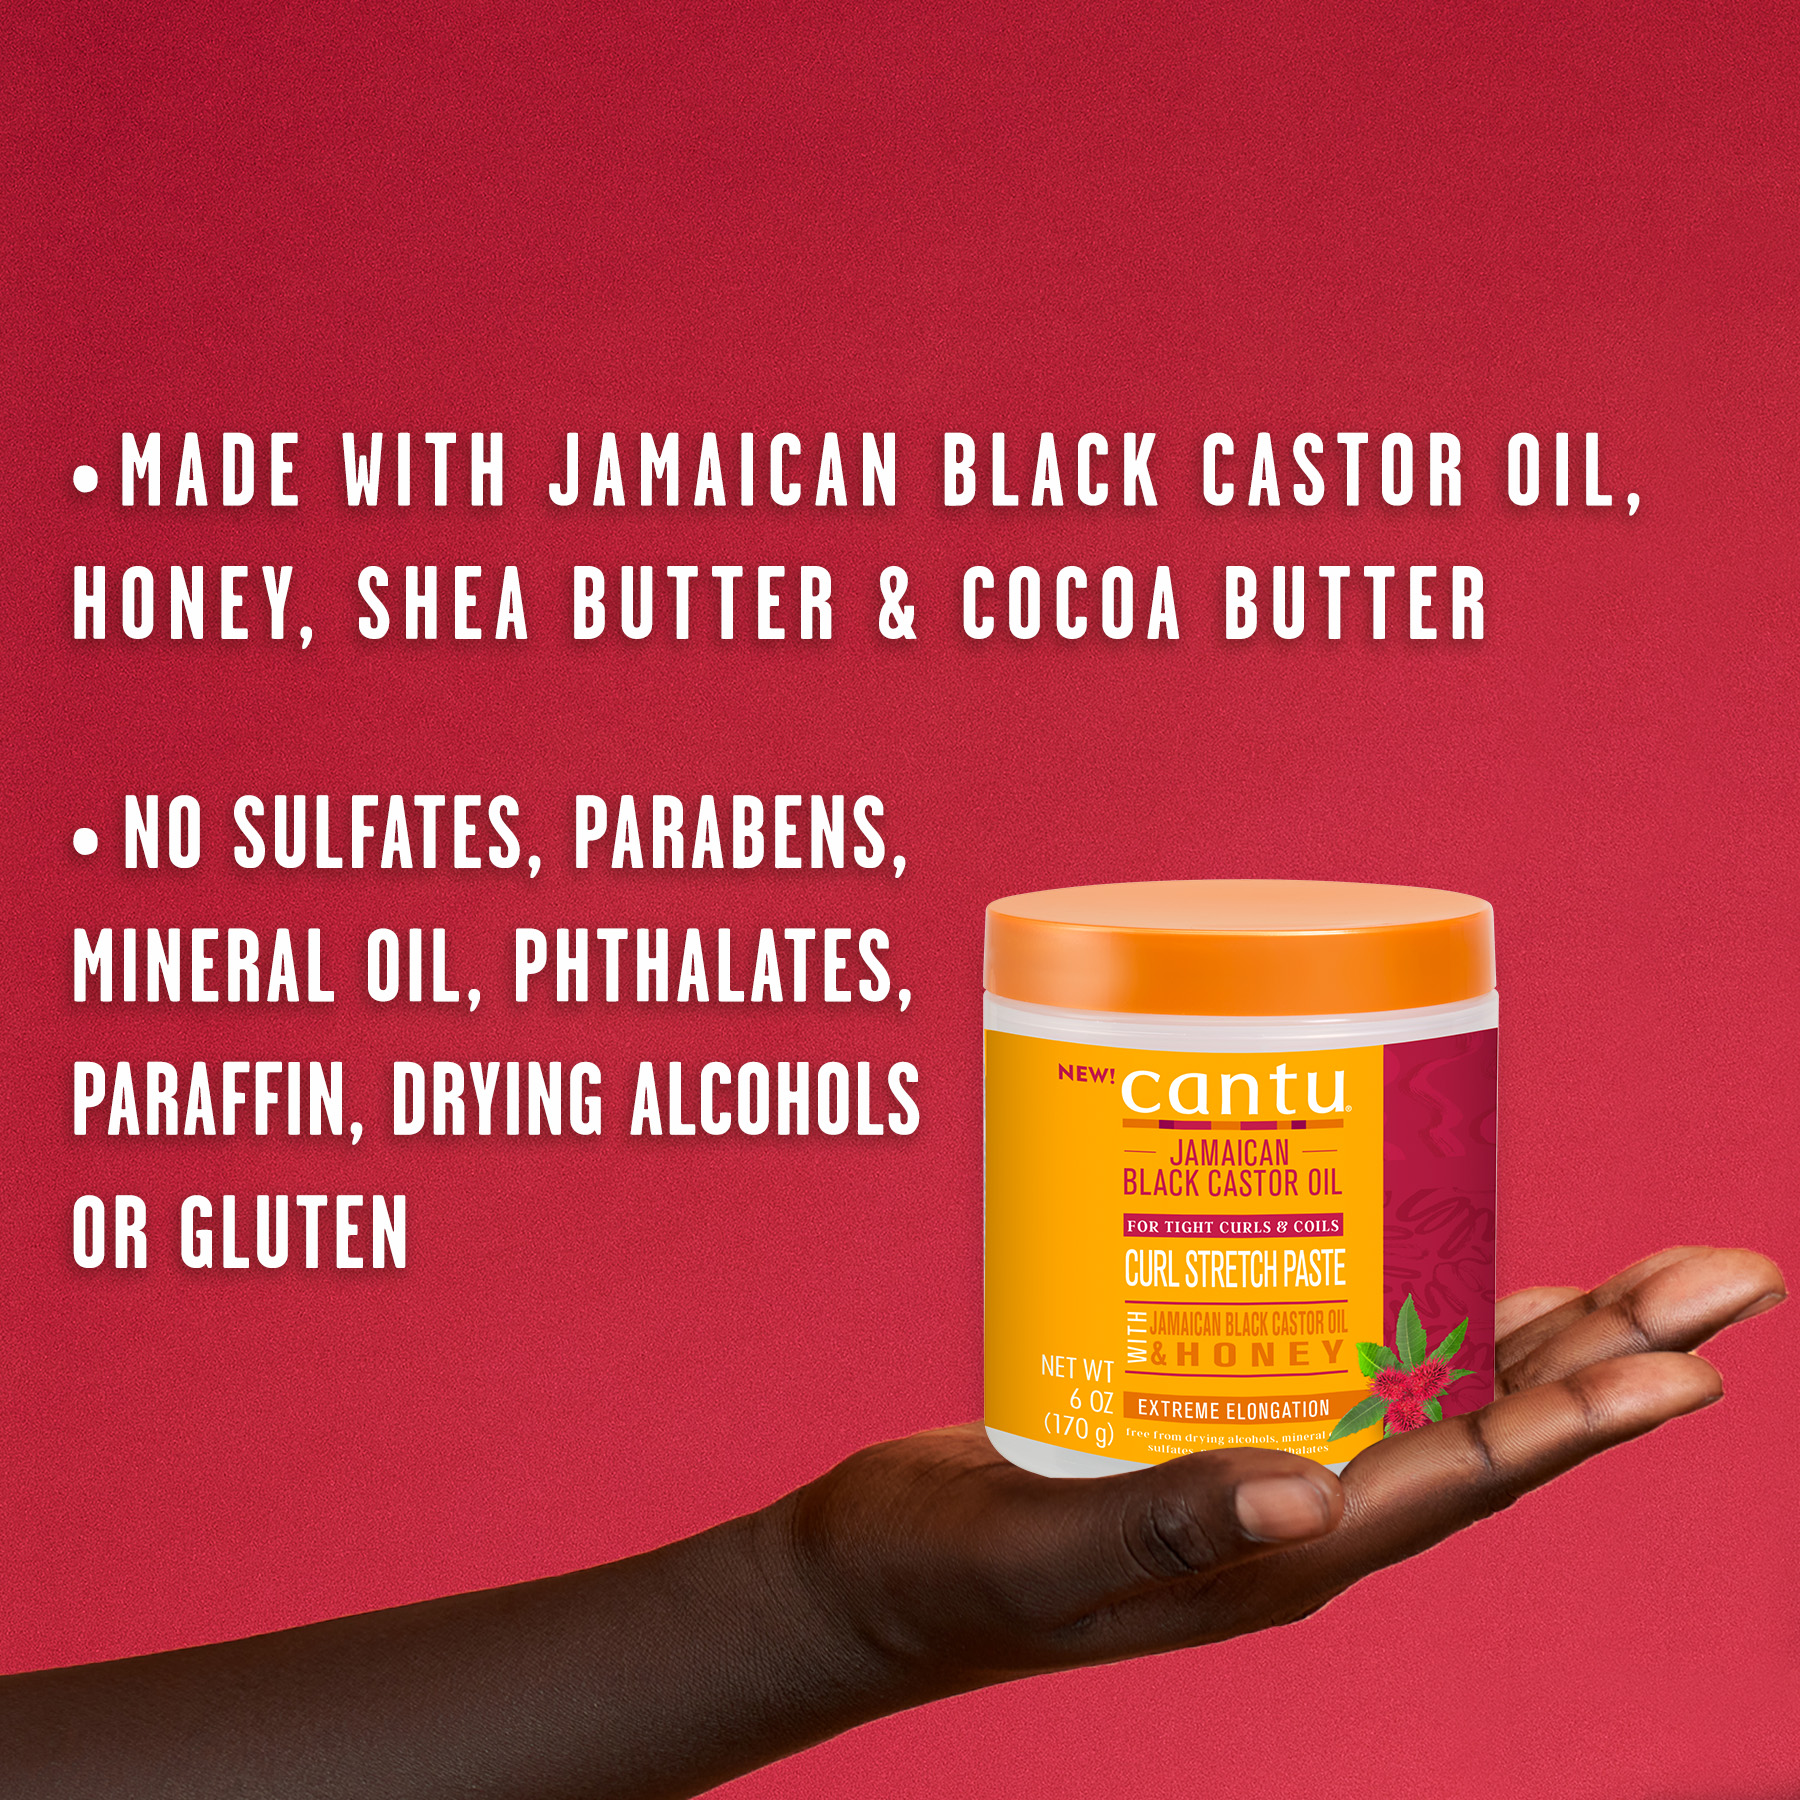 Cantu Jamaican Black Castor Oil Curl Stretch Paste, 6 oz. - image 2 of 7